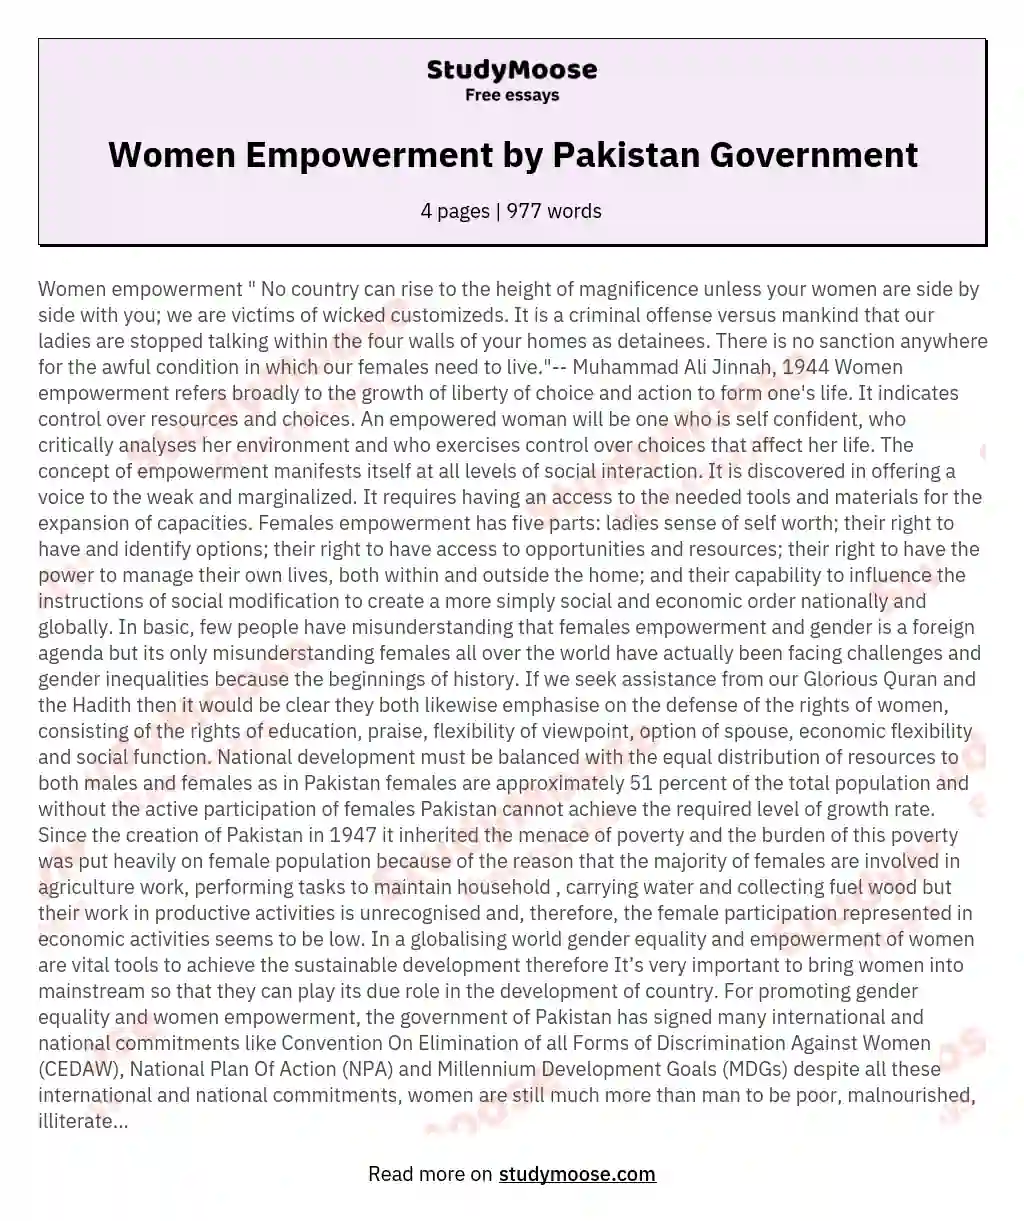 barriers to women's empowerment in pakistan essay